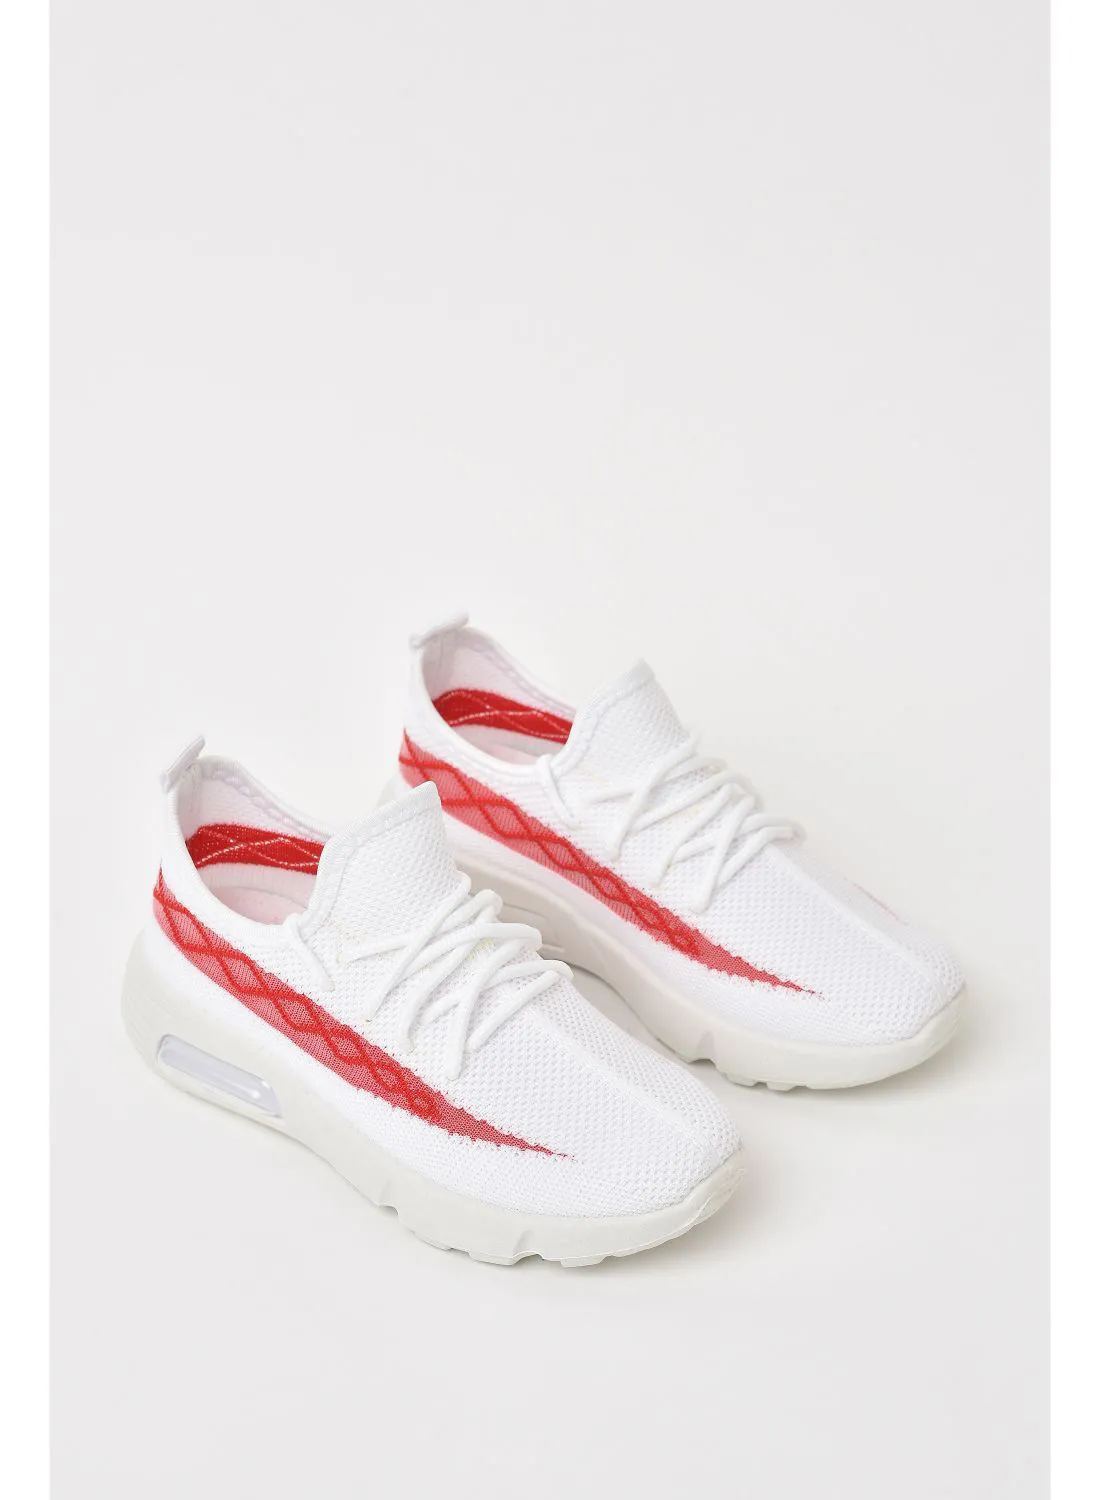 QUWA Casual Sneaker White/Red